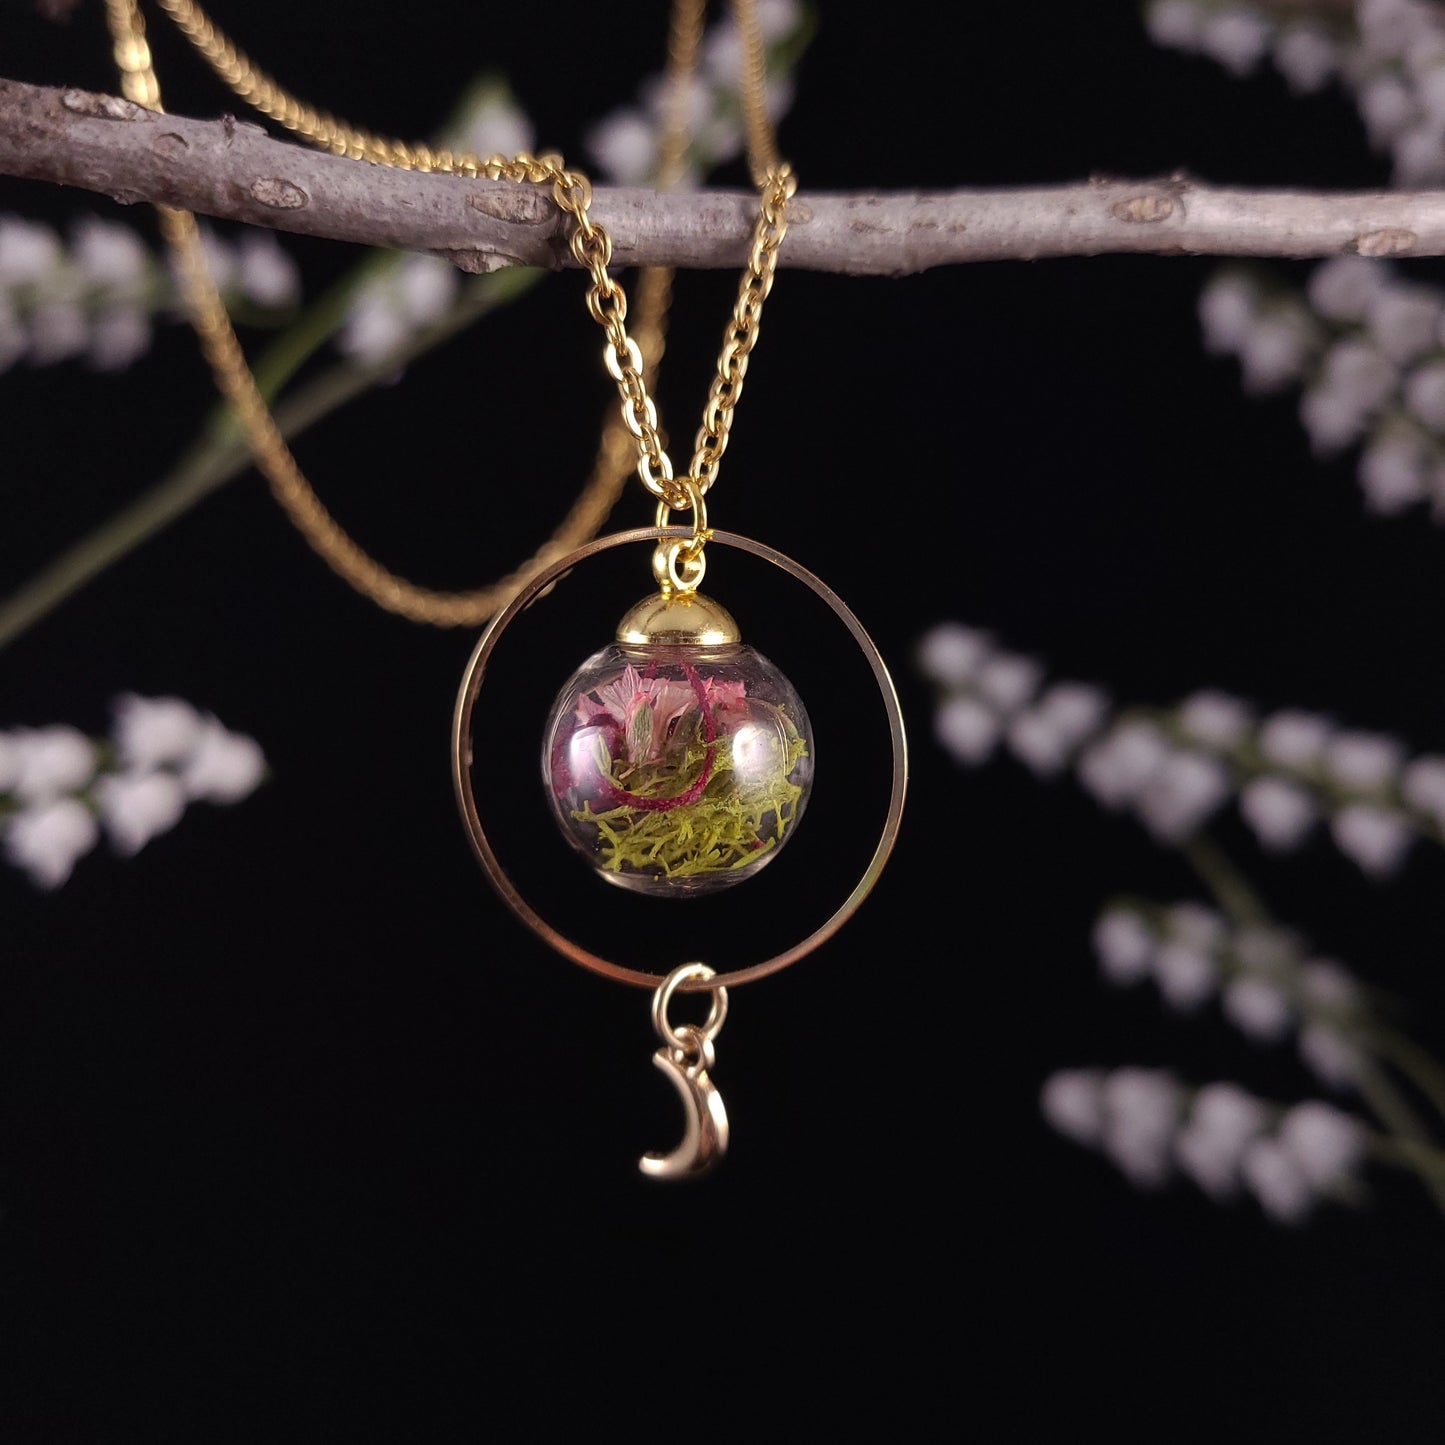 Druidcraft: Sea Lavender & Moss Necklace